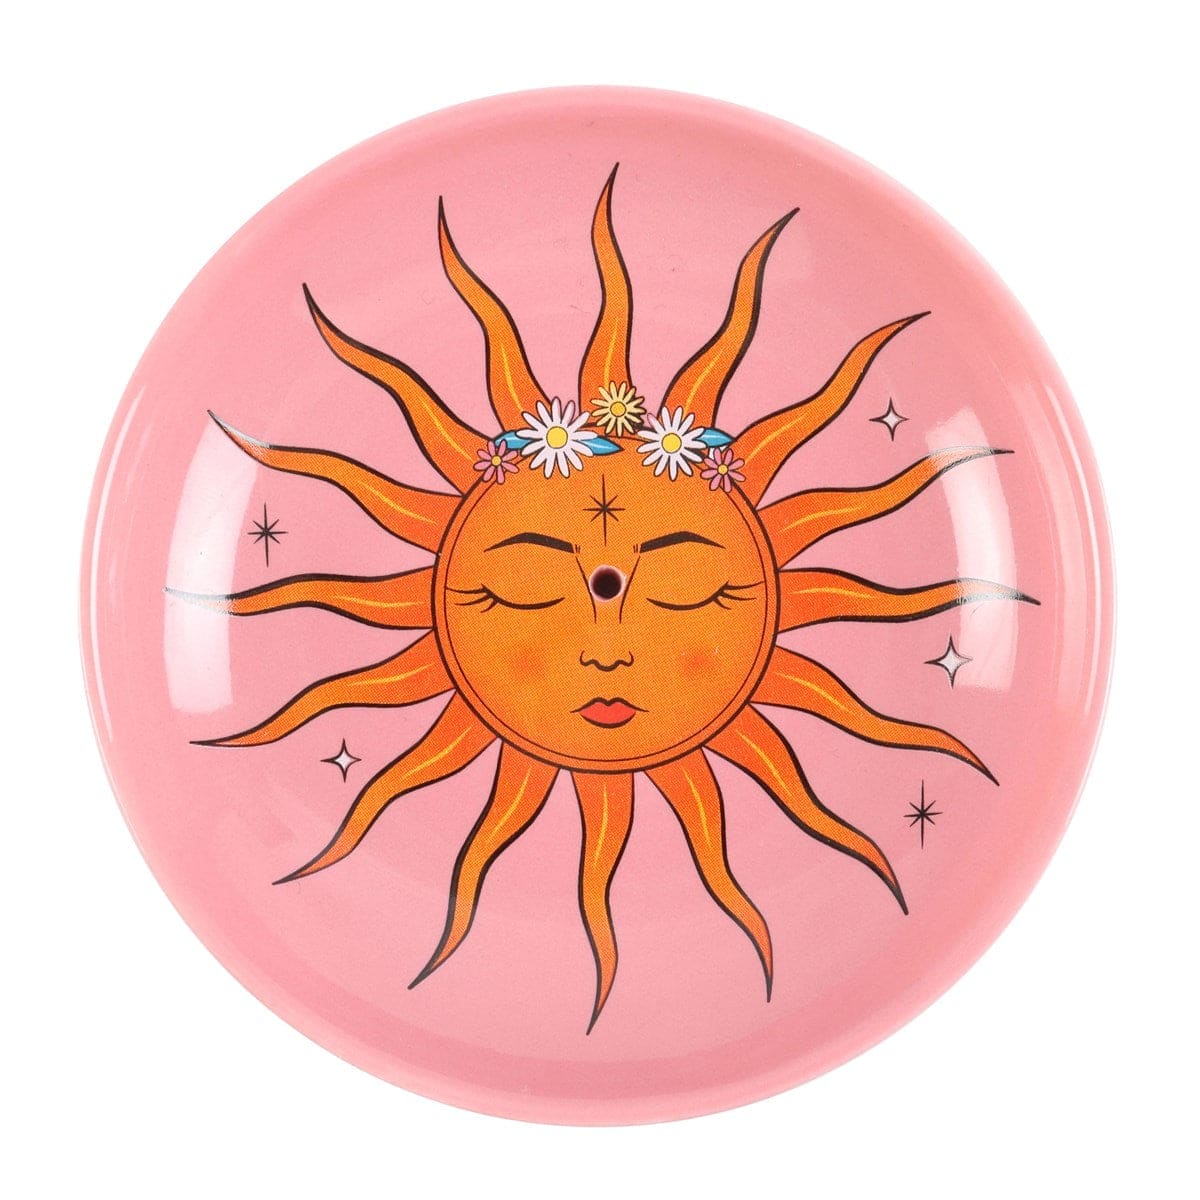 Sun Celestial Incense Holder, The Sun' Tarot Card Design - Incense Holders by Spirit of equinox